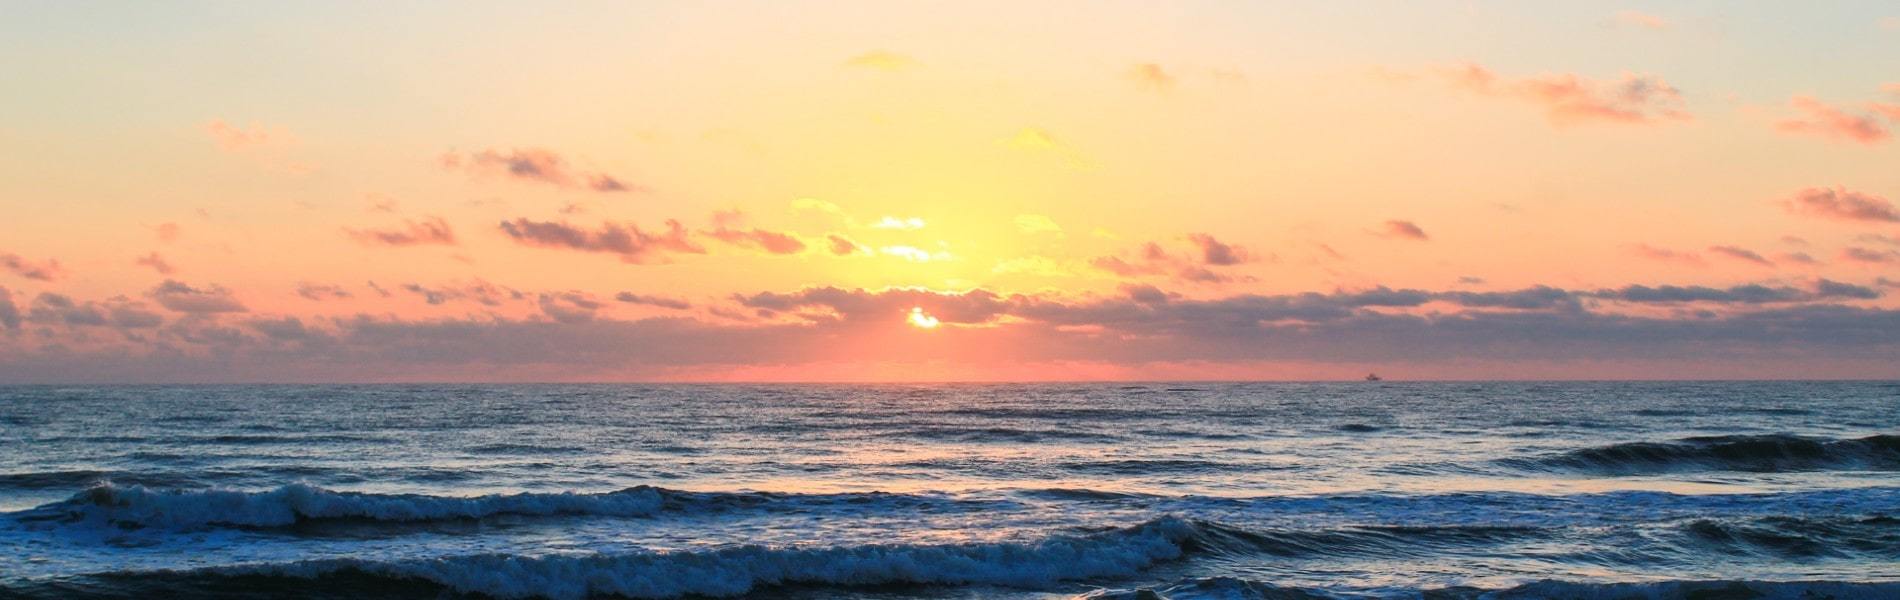 Sunset over the ocean in Ocoee, Florida